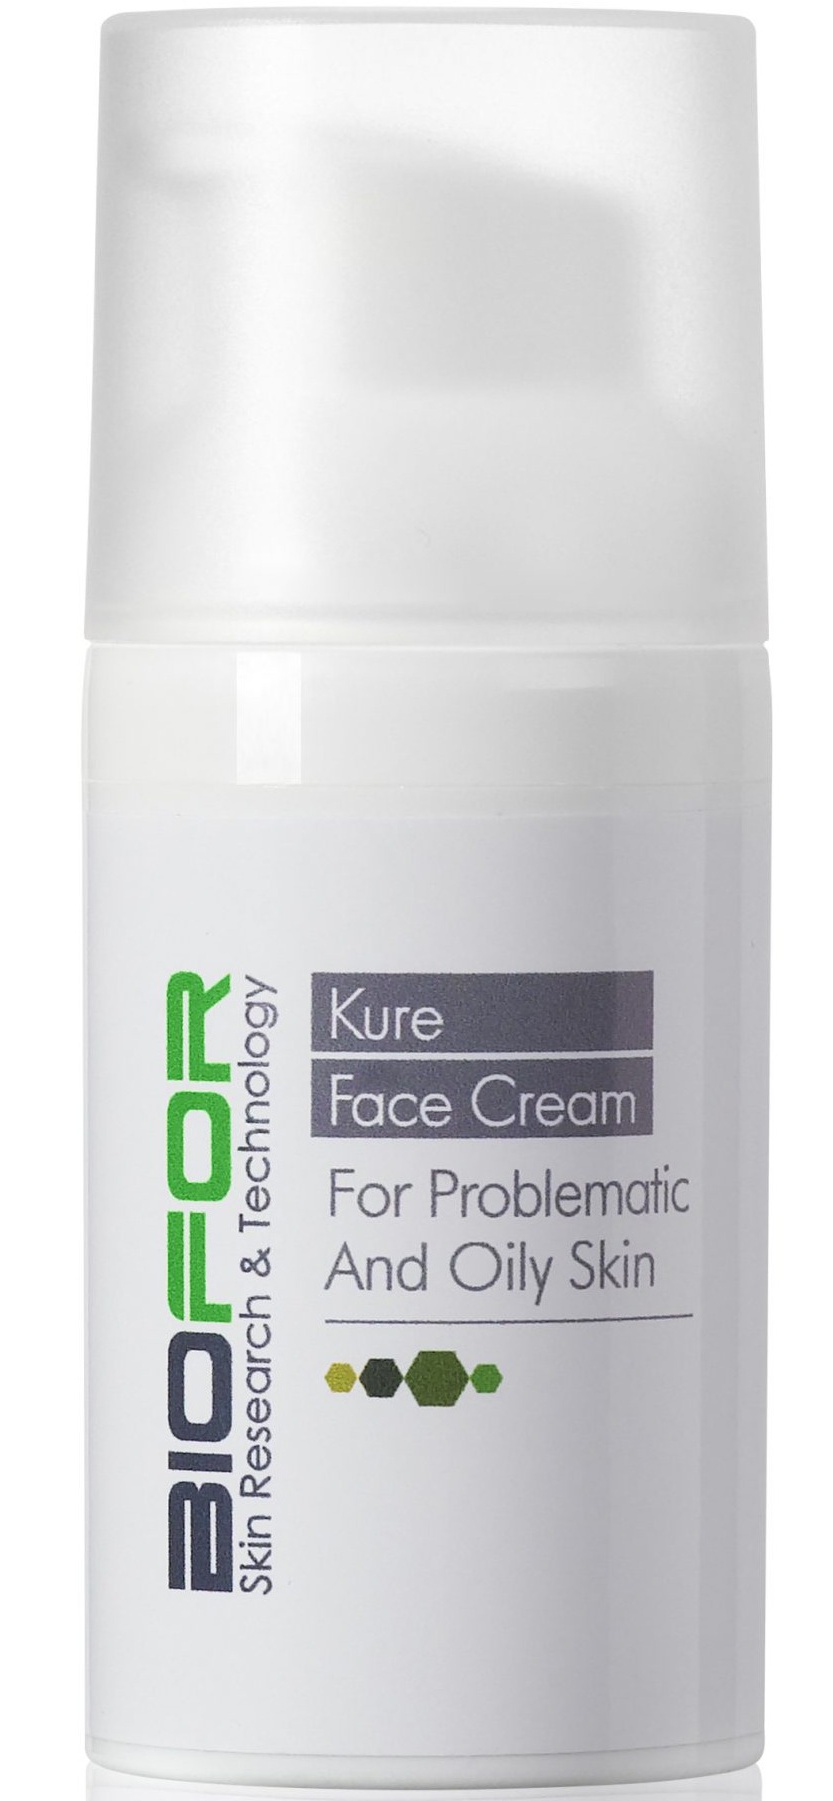 Biofor Kure Face Cream